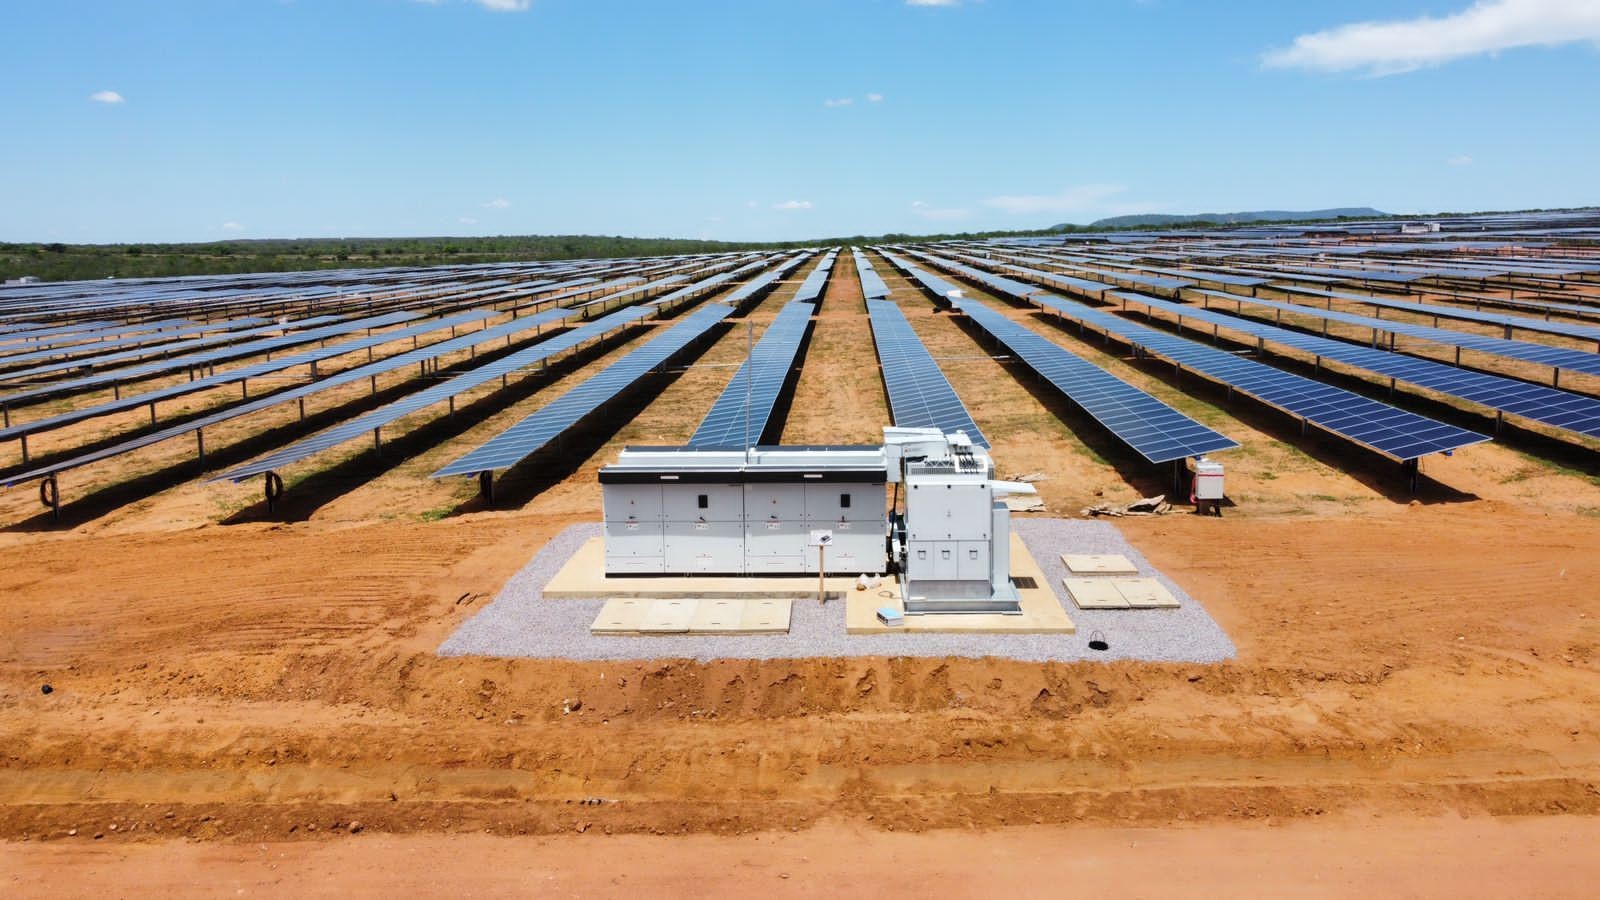 Ingeteam suministra sus inversores solares para dos proyectos de Mercury Renew en Brasil que suman 210 MWp